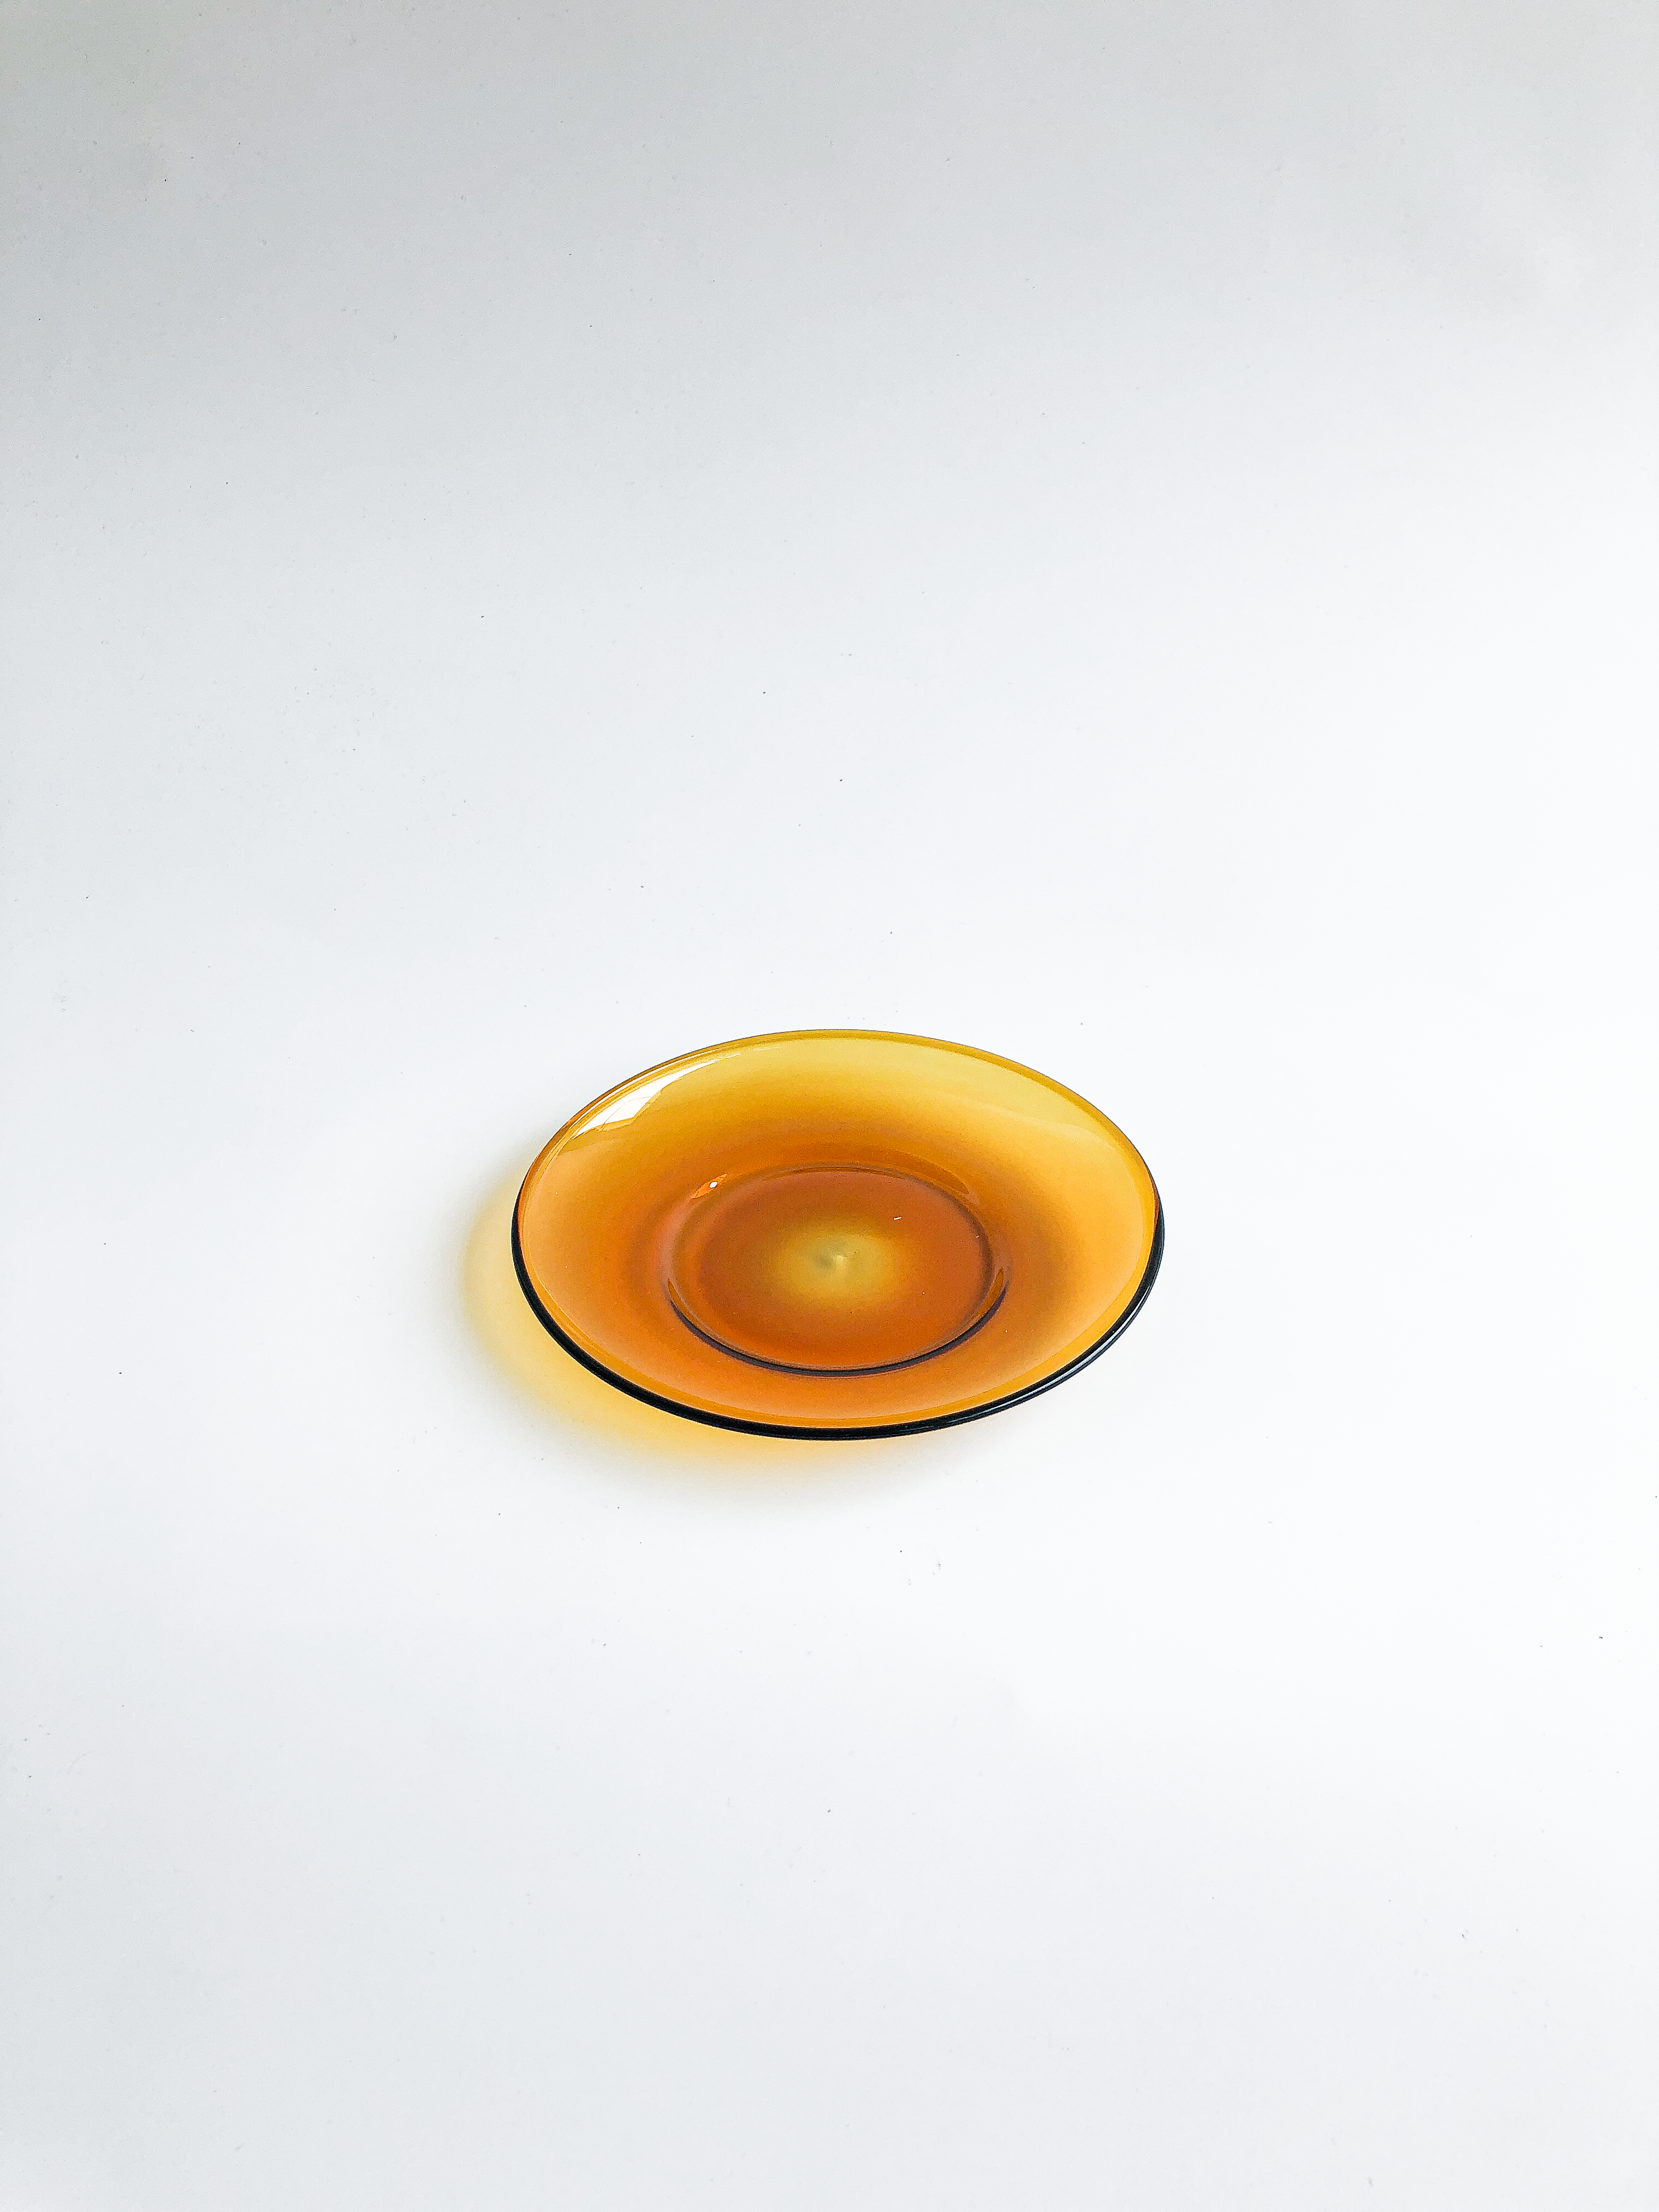 Amber Tea Set by PROSE Tabletop